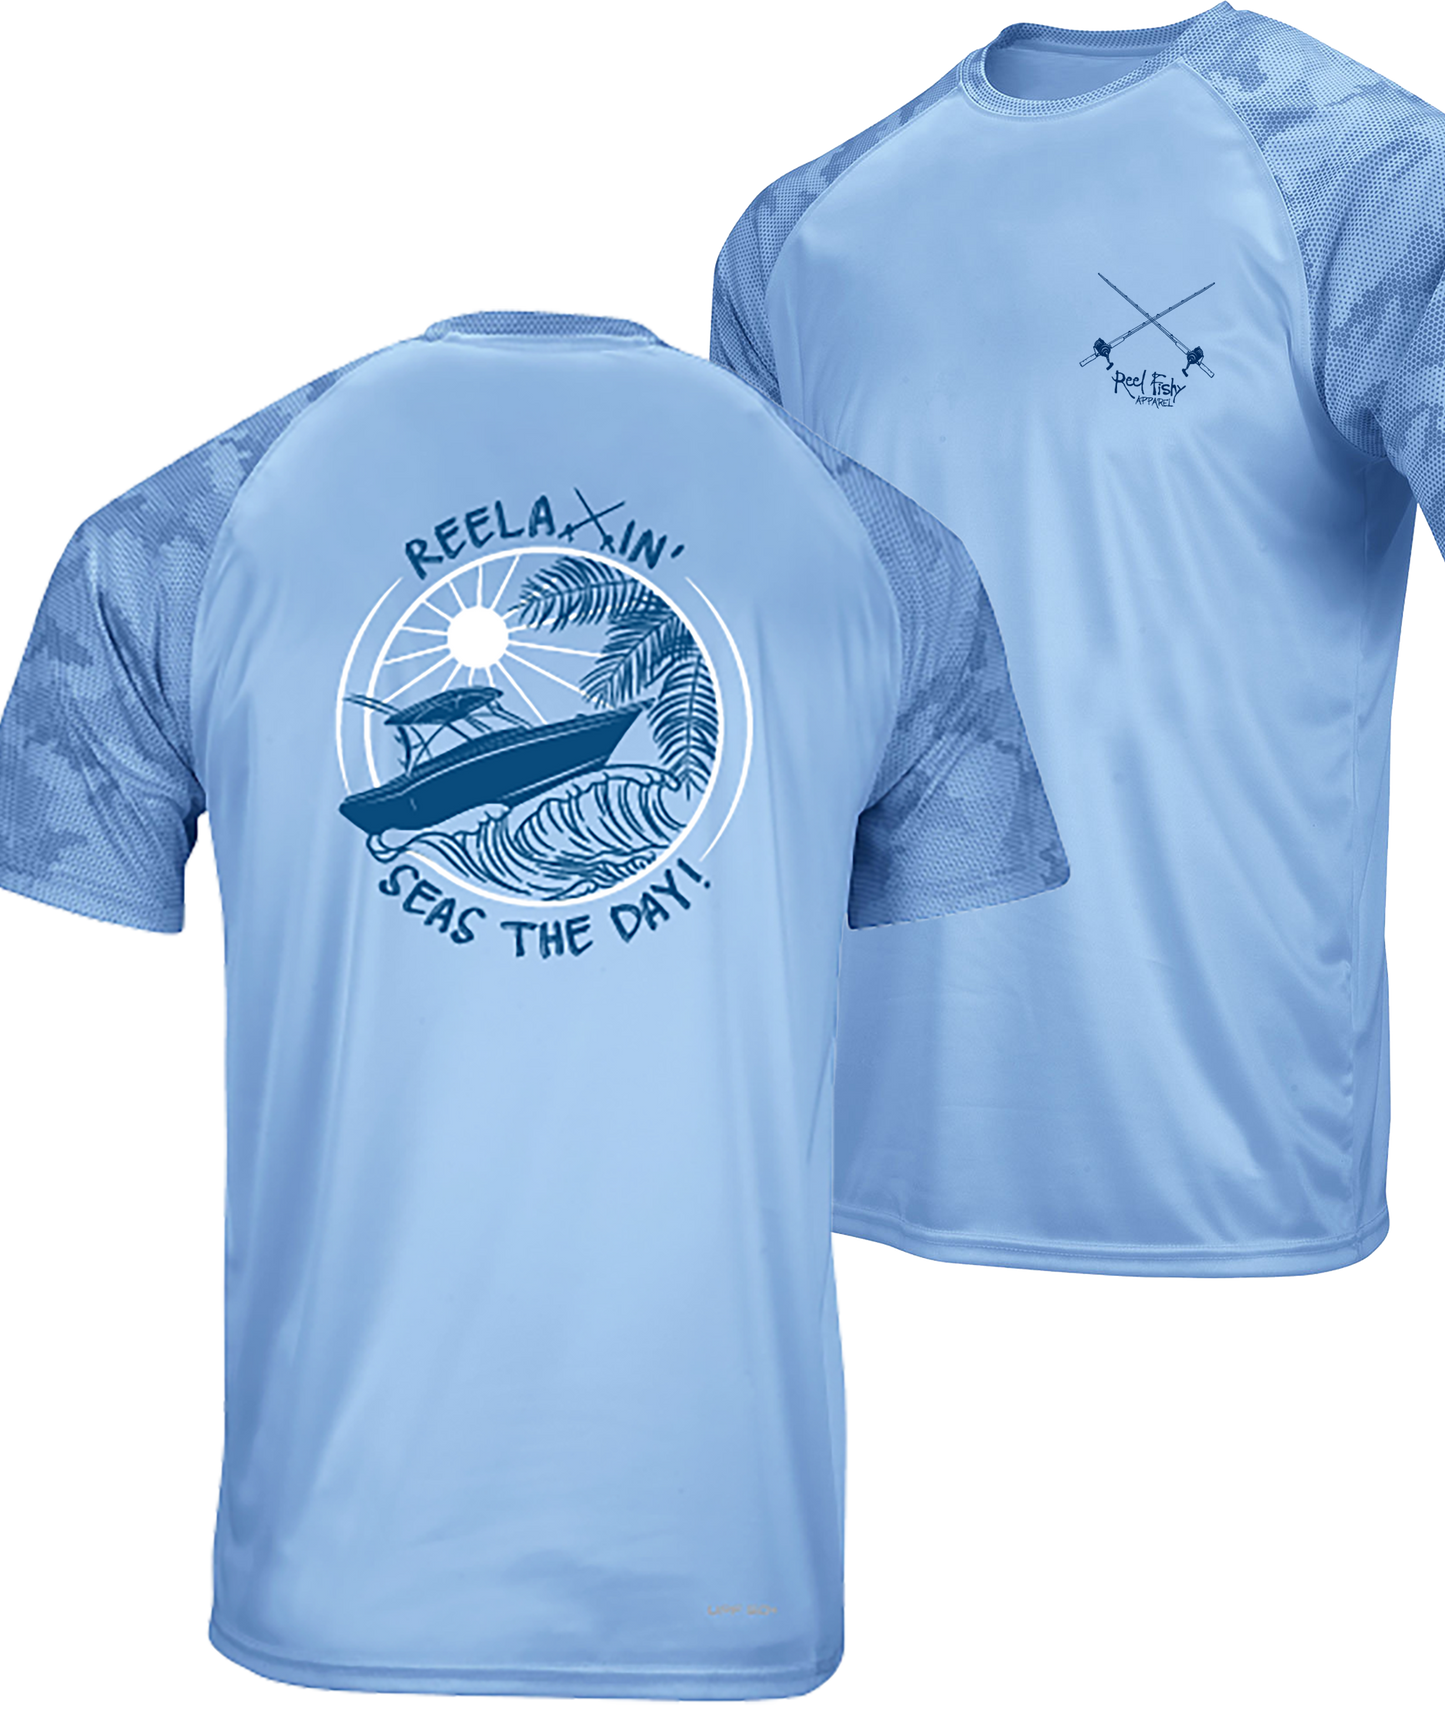 Blue Mist Cayman Digital Camo  Reelaxin' Performance Dry-Fit Fishing Short Sleeve Shirts, 50+ UPF Sun Protection - Reel Fishy Apparel